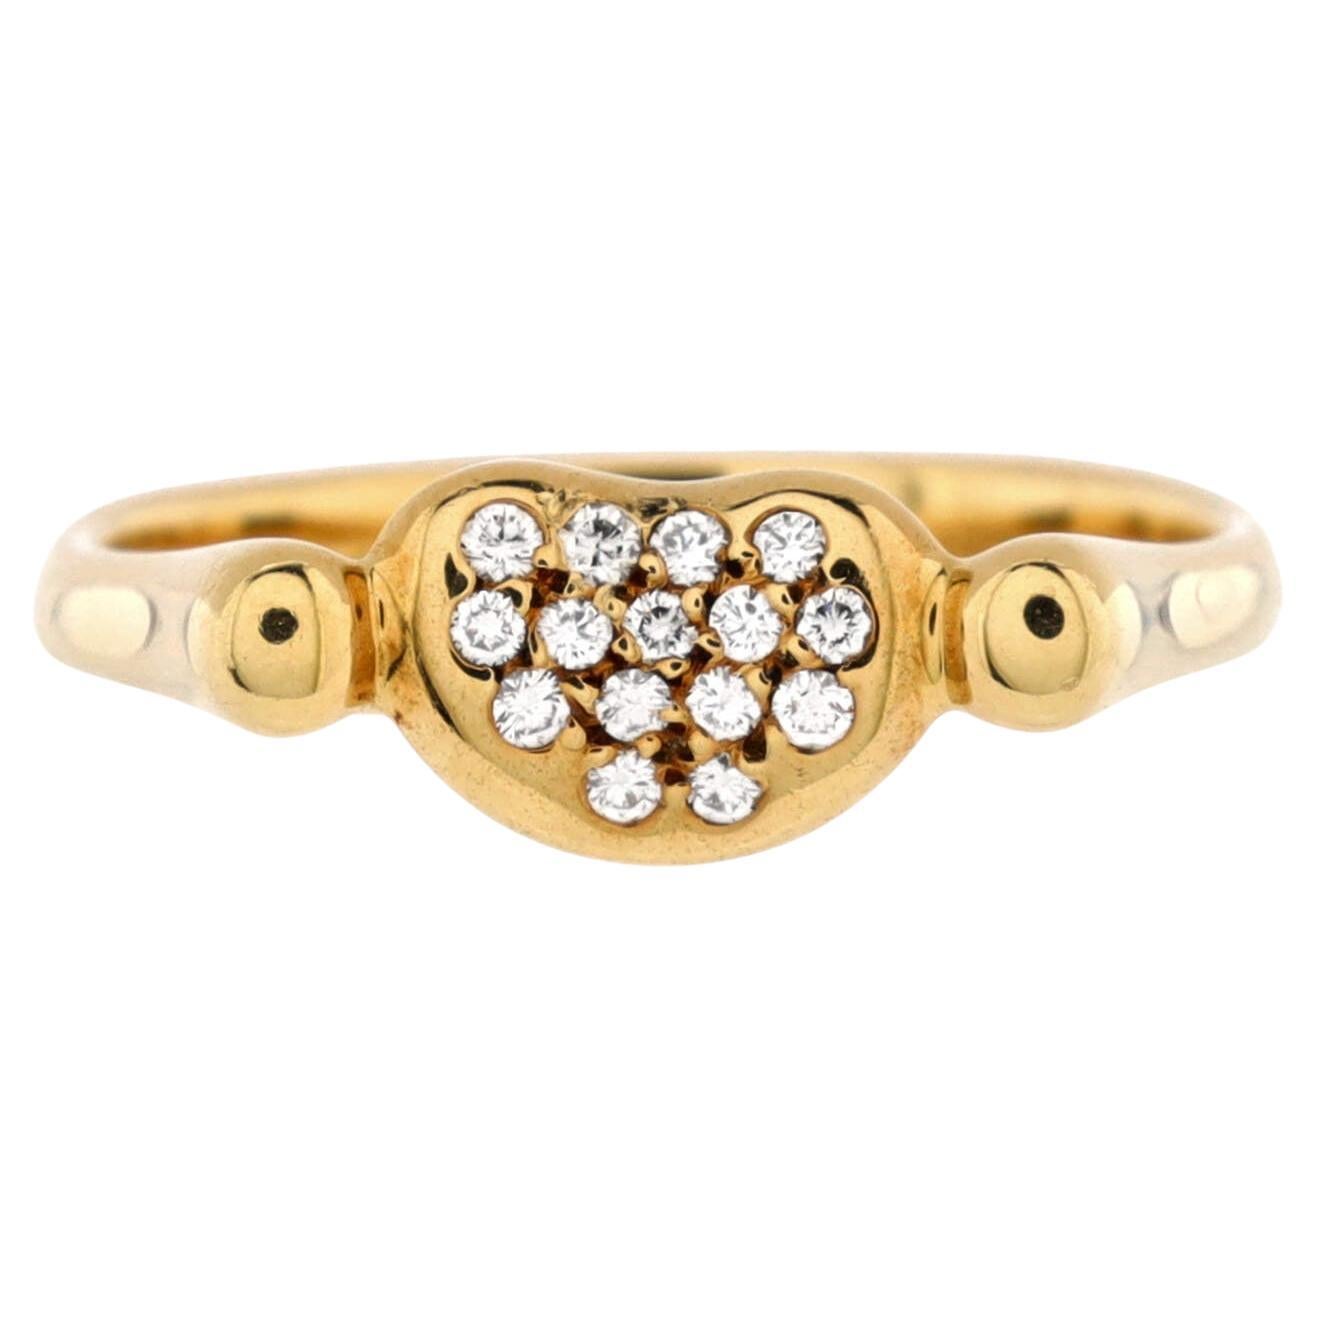 Tiffany & Co. Elsa Peretti Bean Band Ring 18K Yellow Gold with Diamonds